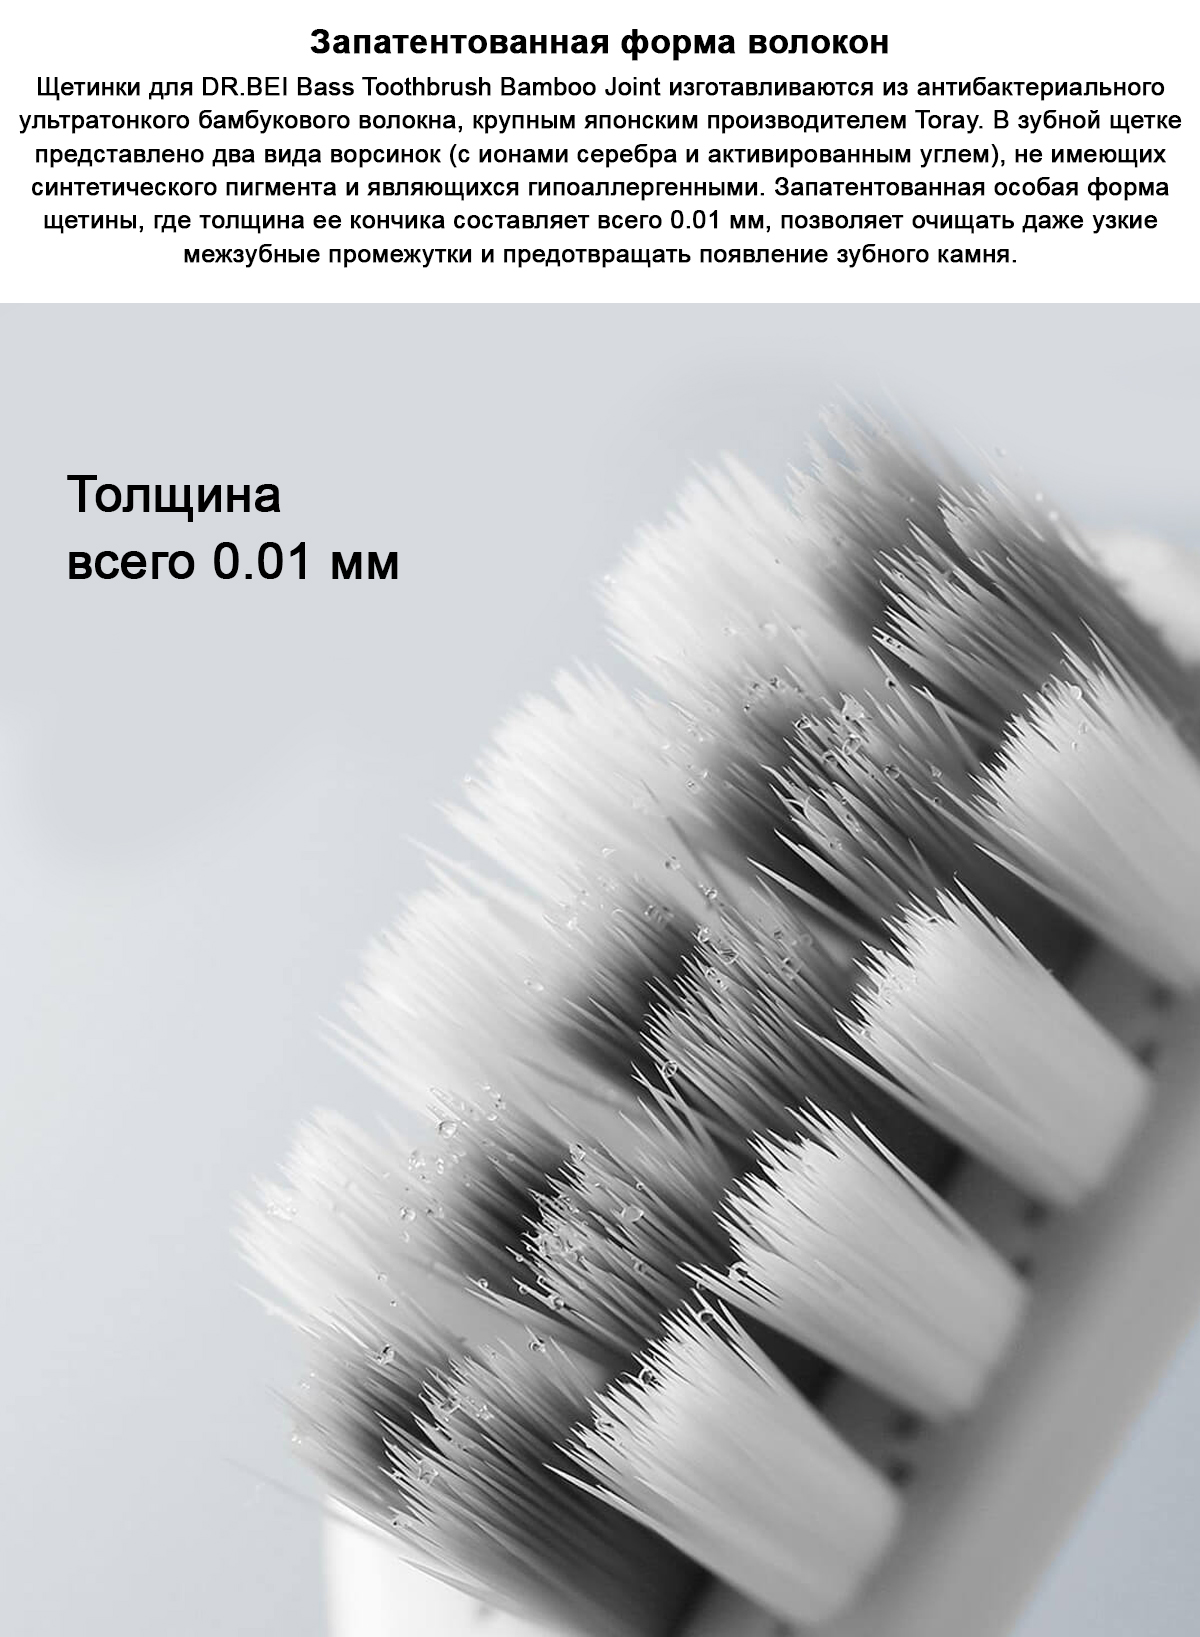 Набор зубных щеток DR.BEI Bass Toothbrush Bamboo Joint